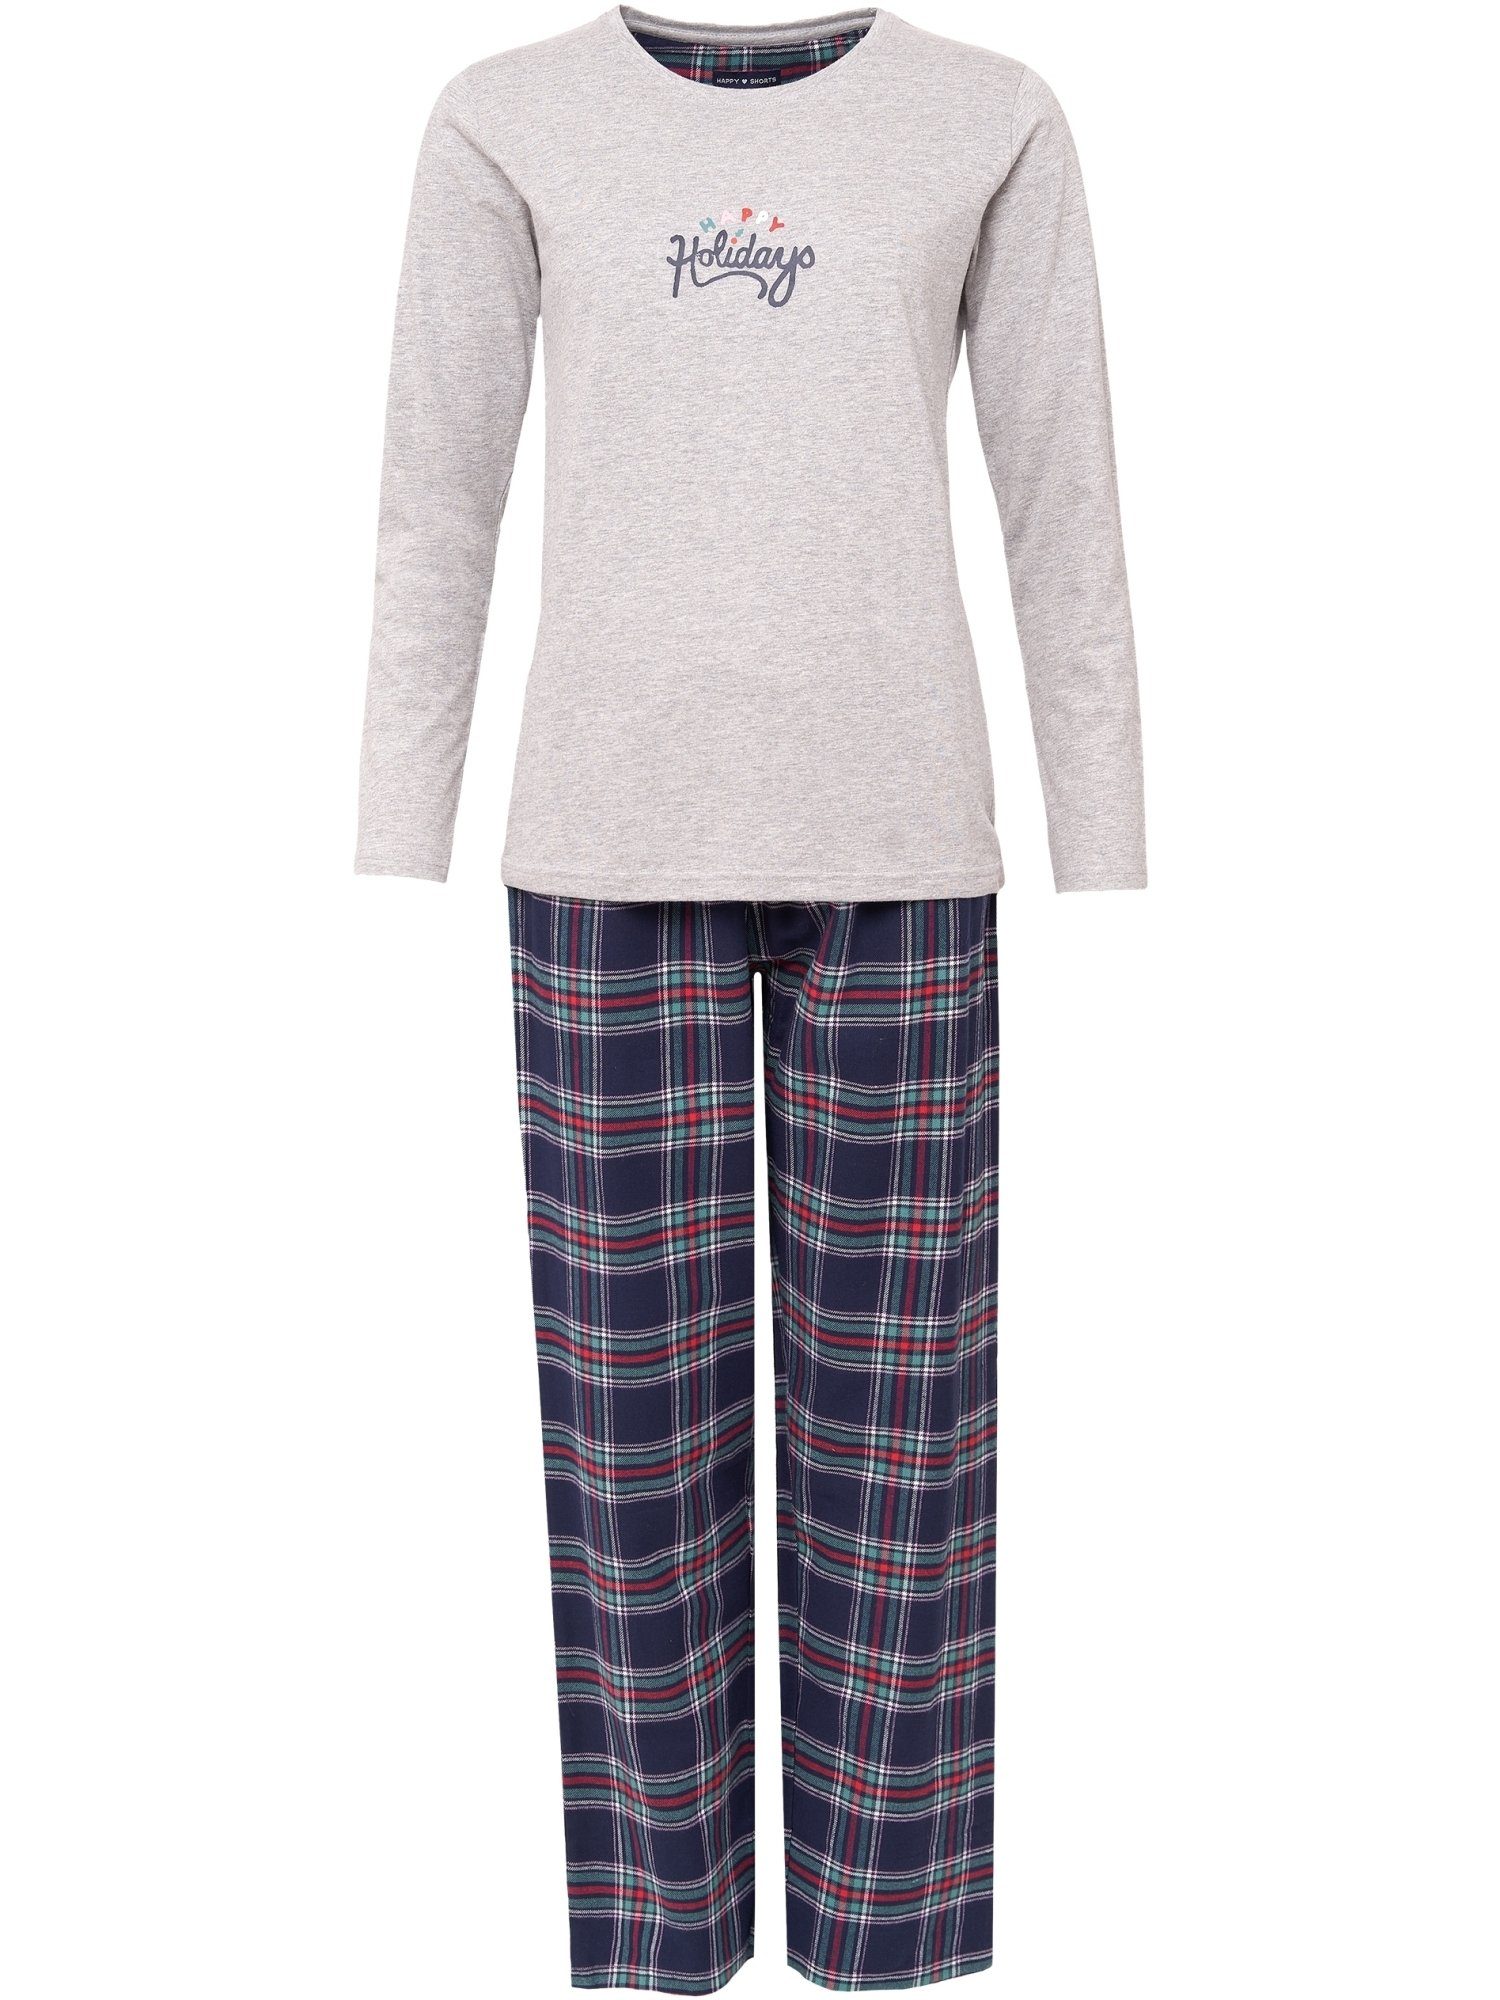 Xmas tlg) Pyjama (2 schlafanzug checkgreymel HAPPY schlafmode SHORTS bequem